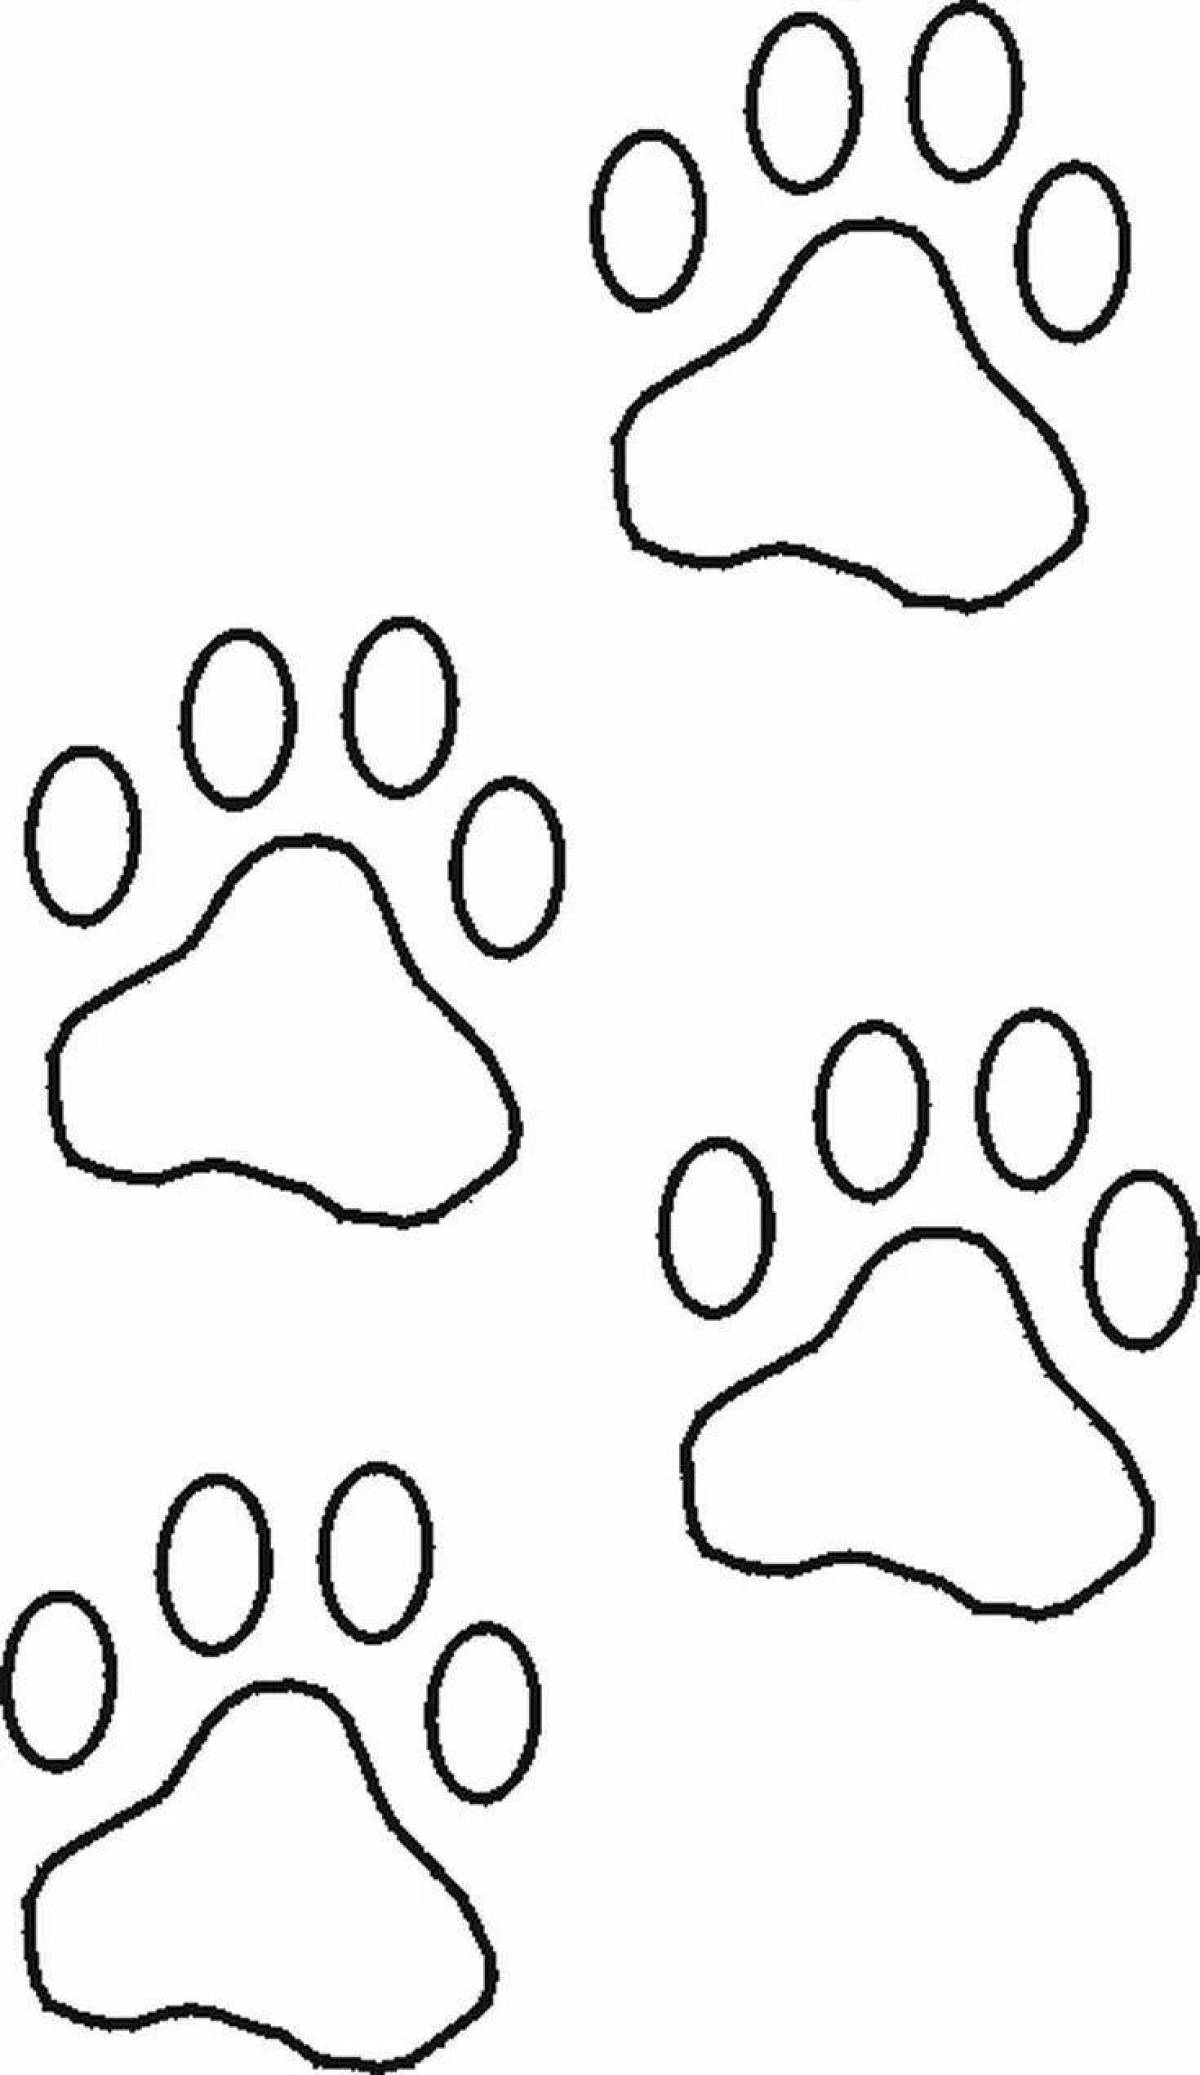 Color Explosive Animal Footprint Coloring Page